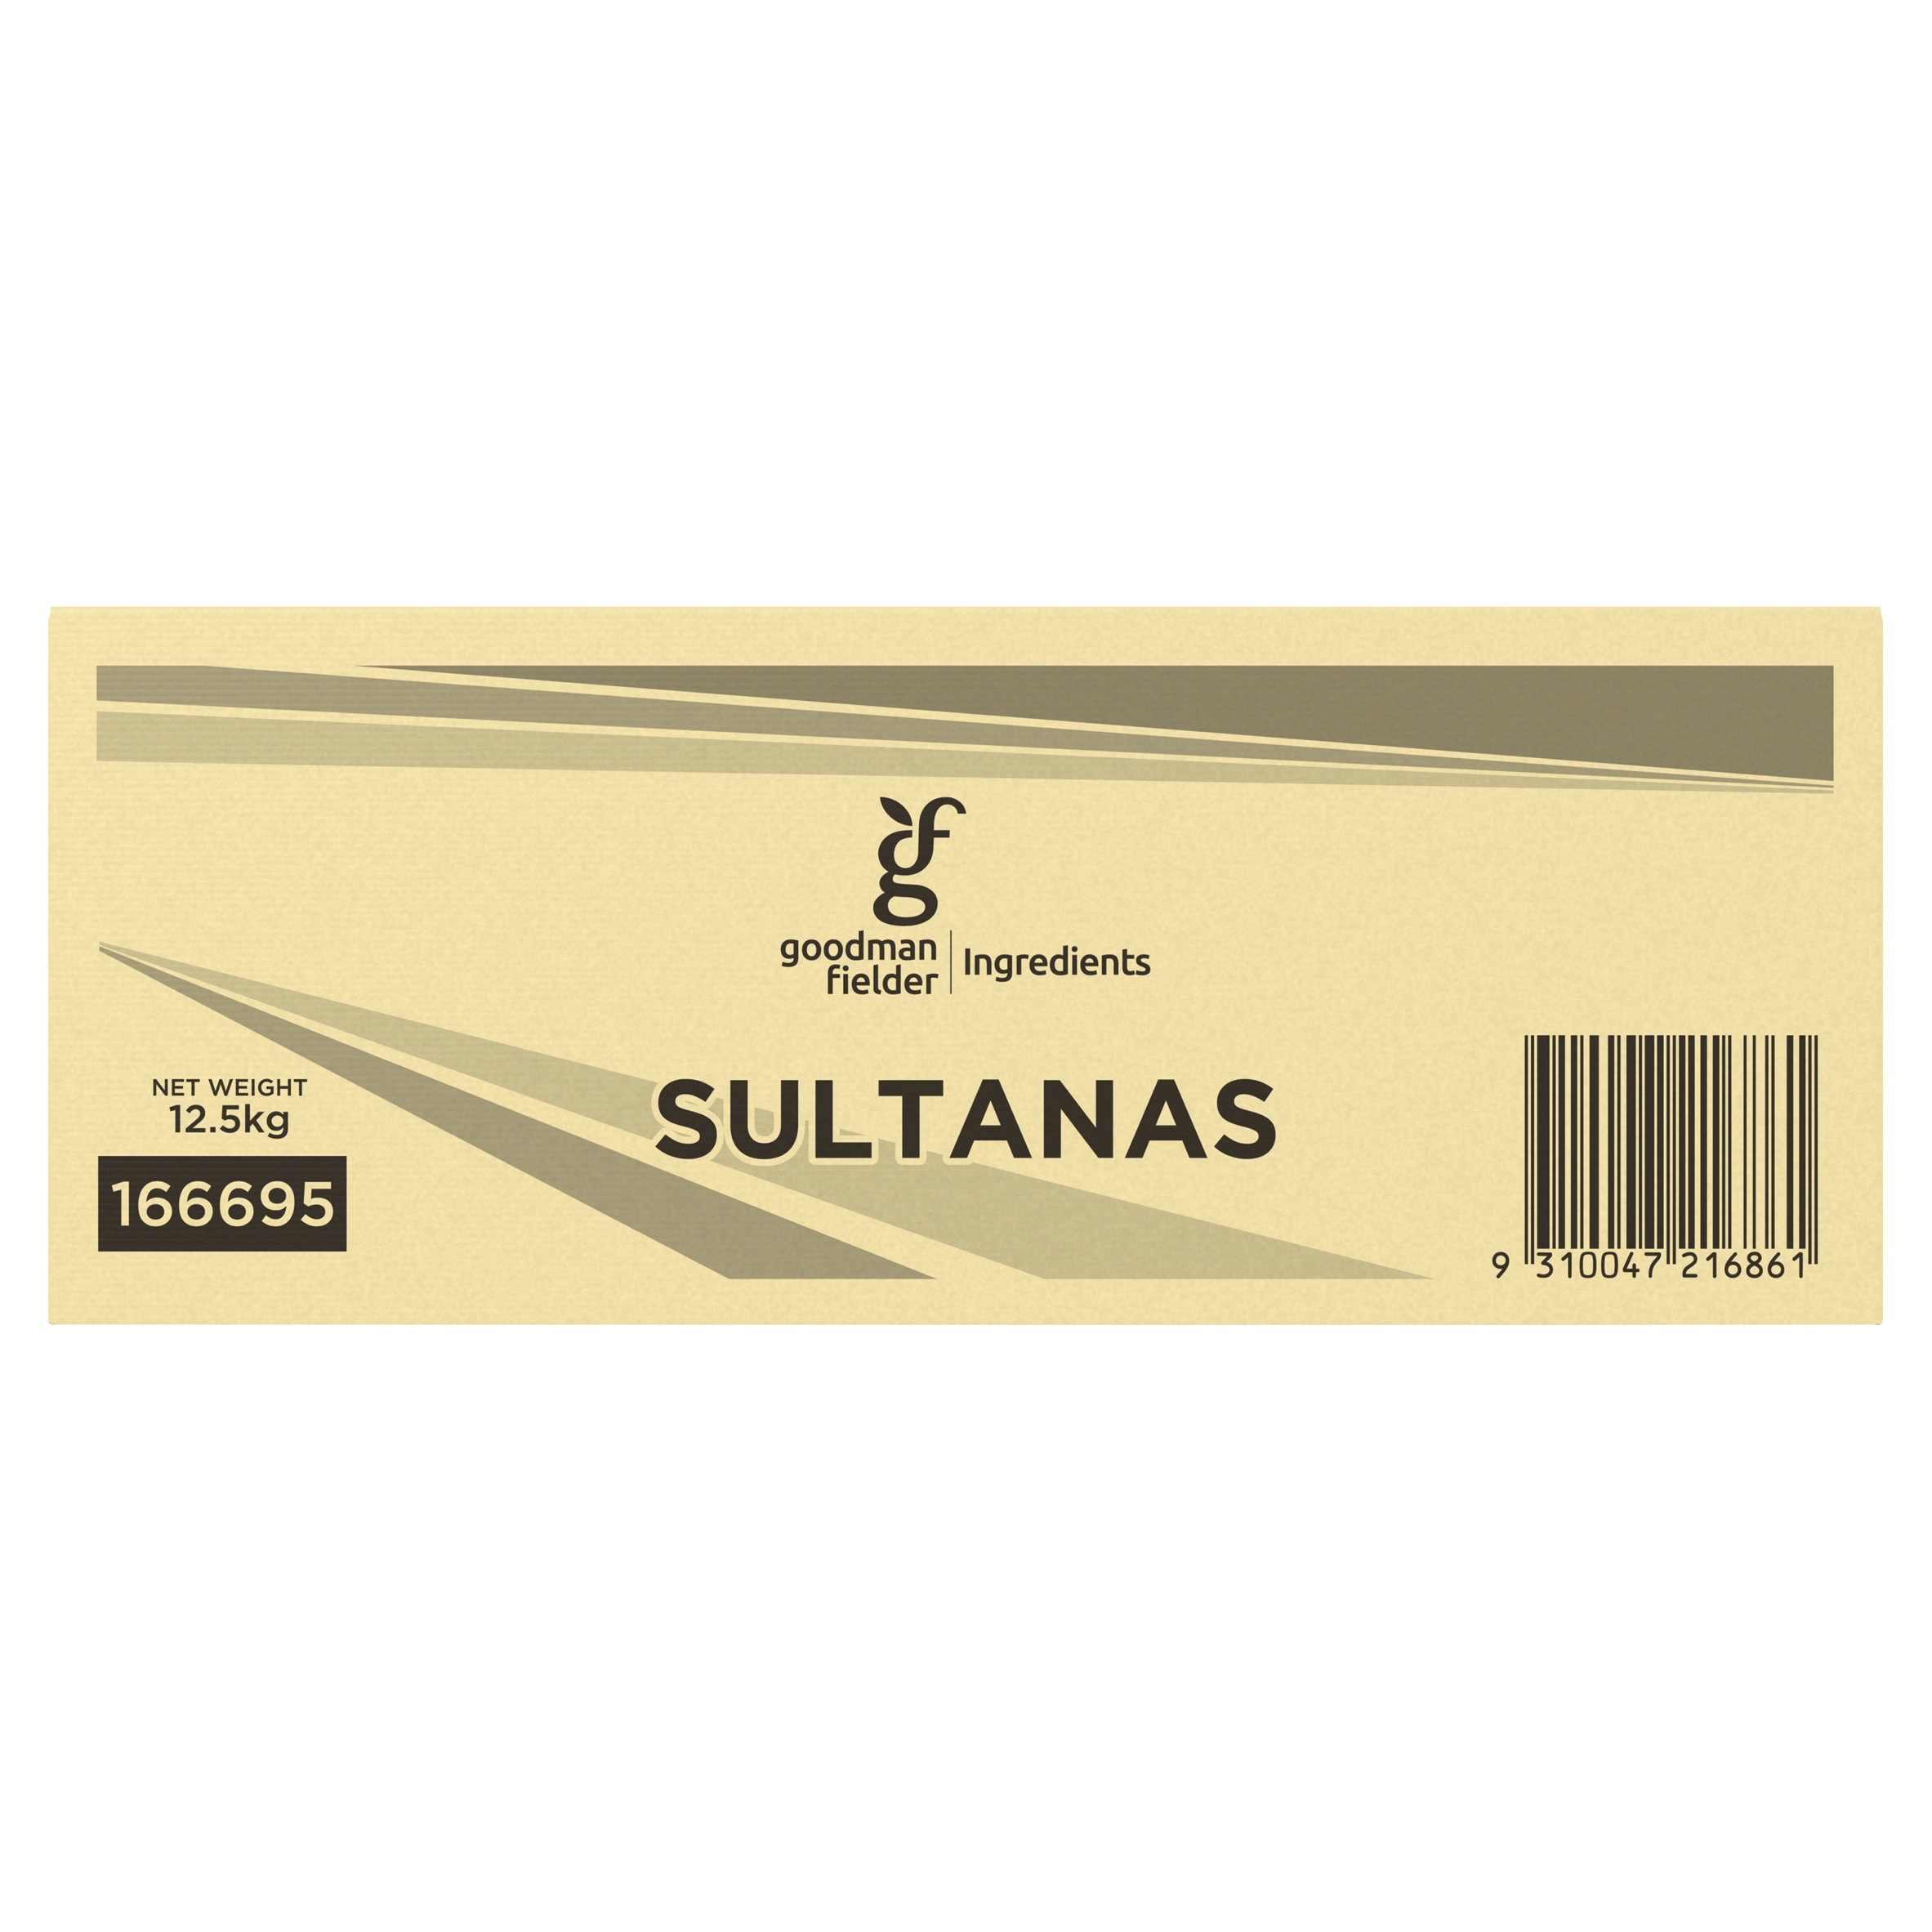 Goodman Fielder Ingredients Sultanas 12.5kg